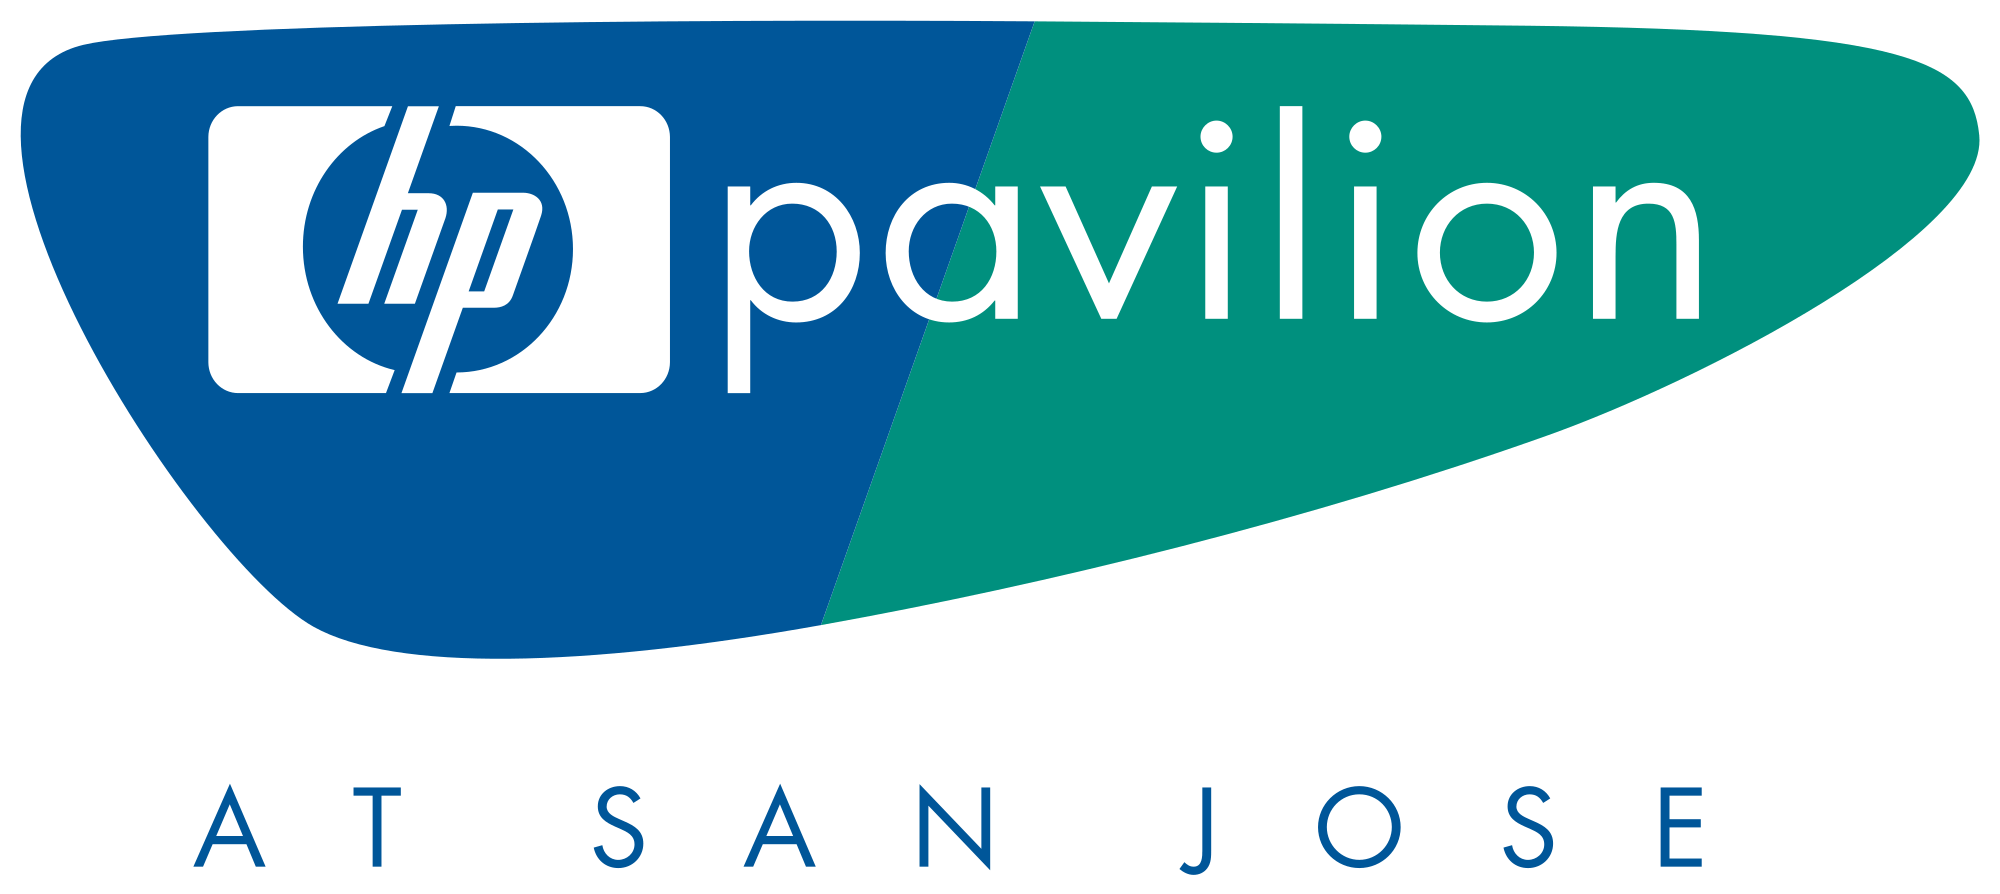 HP Pavilion Logo - HP Pavilion Logo.svg